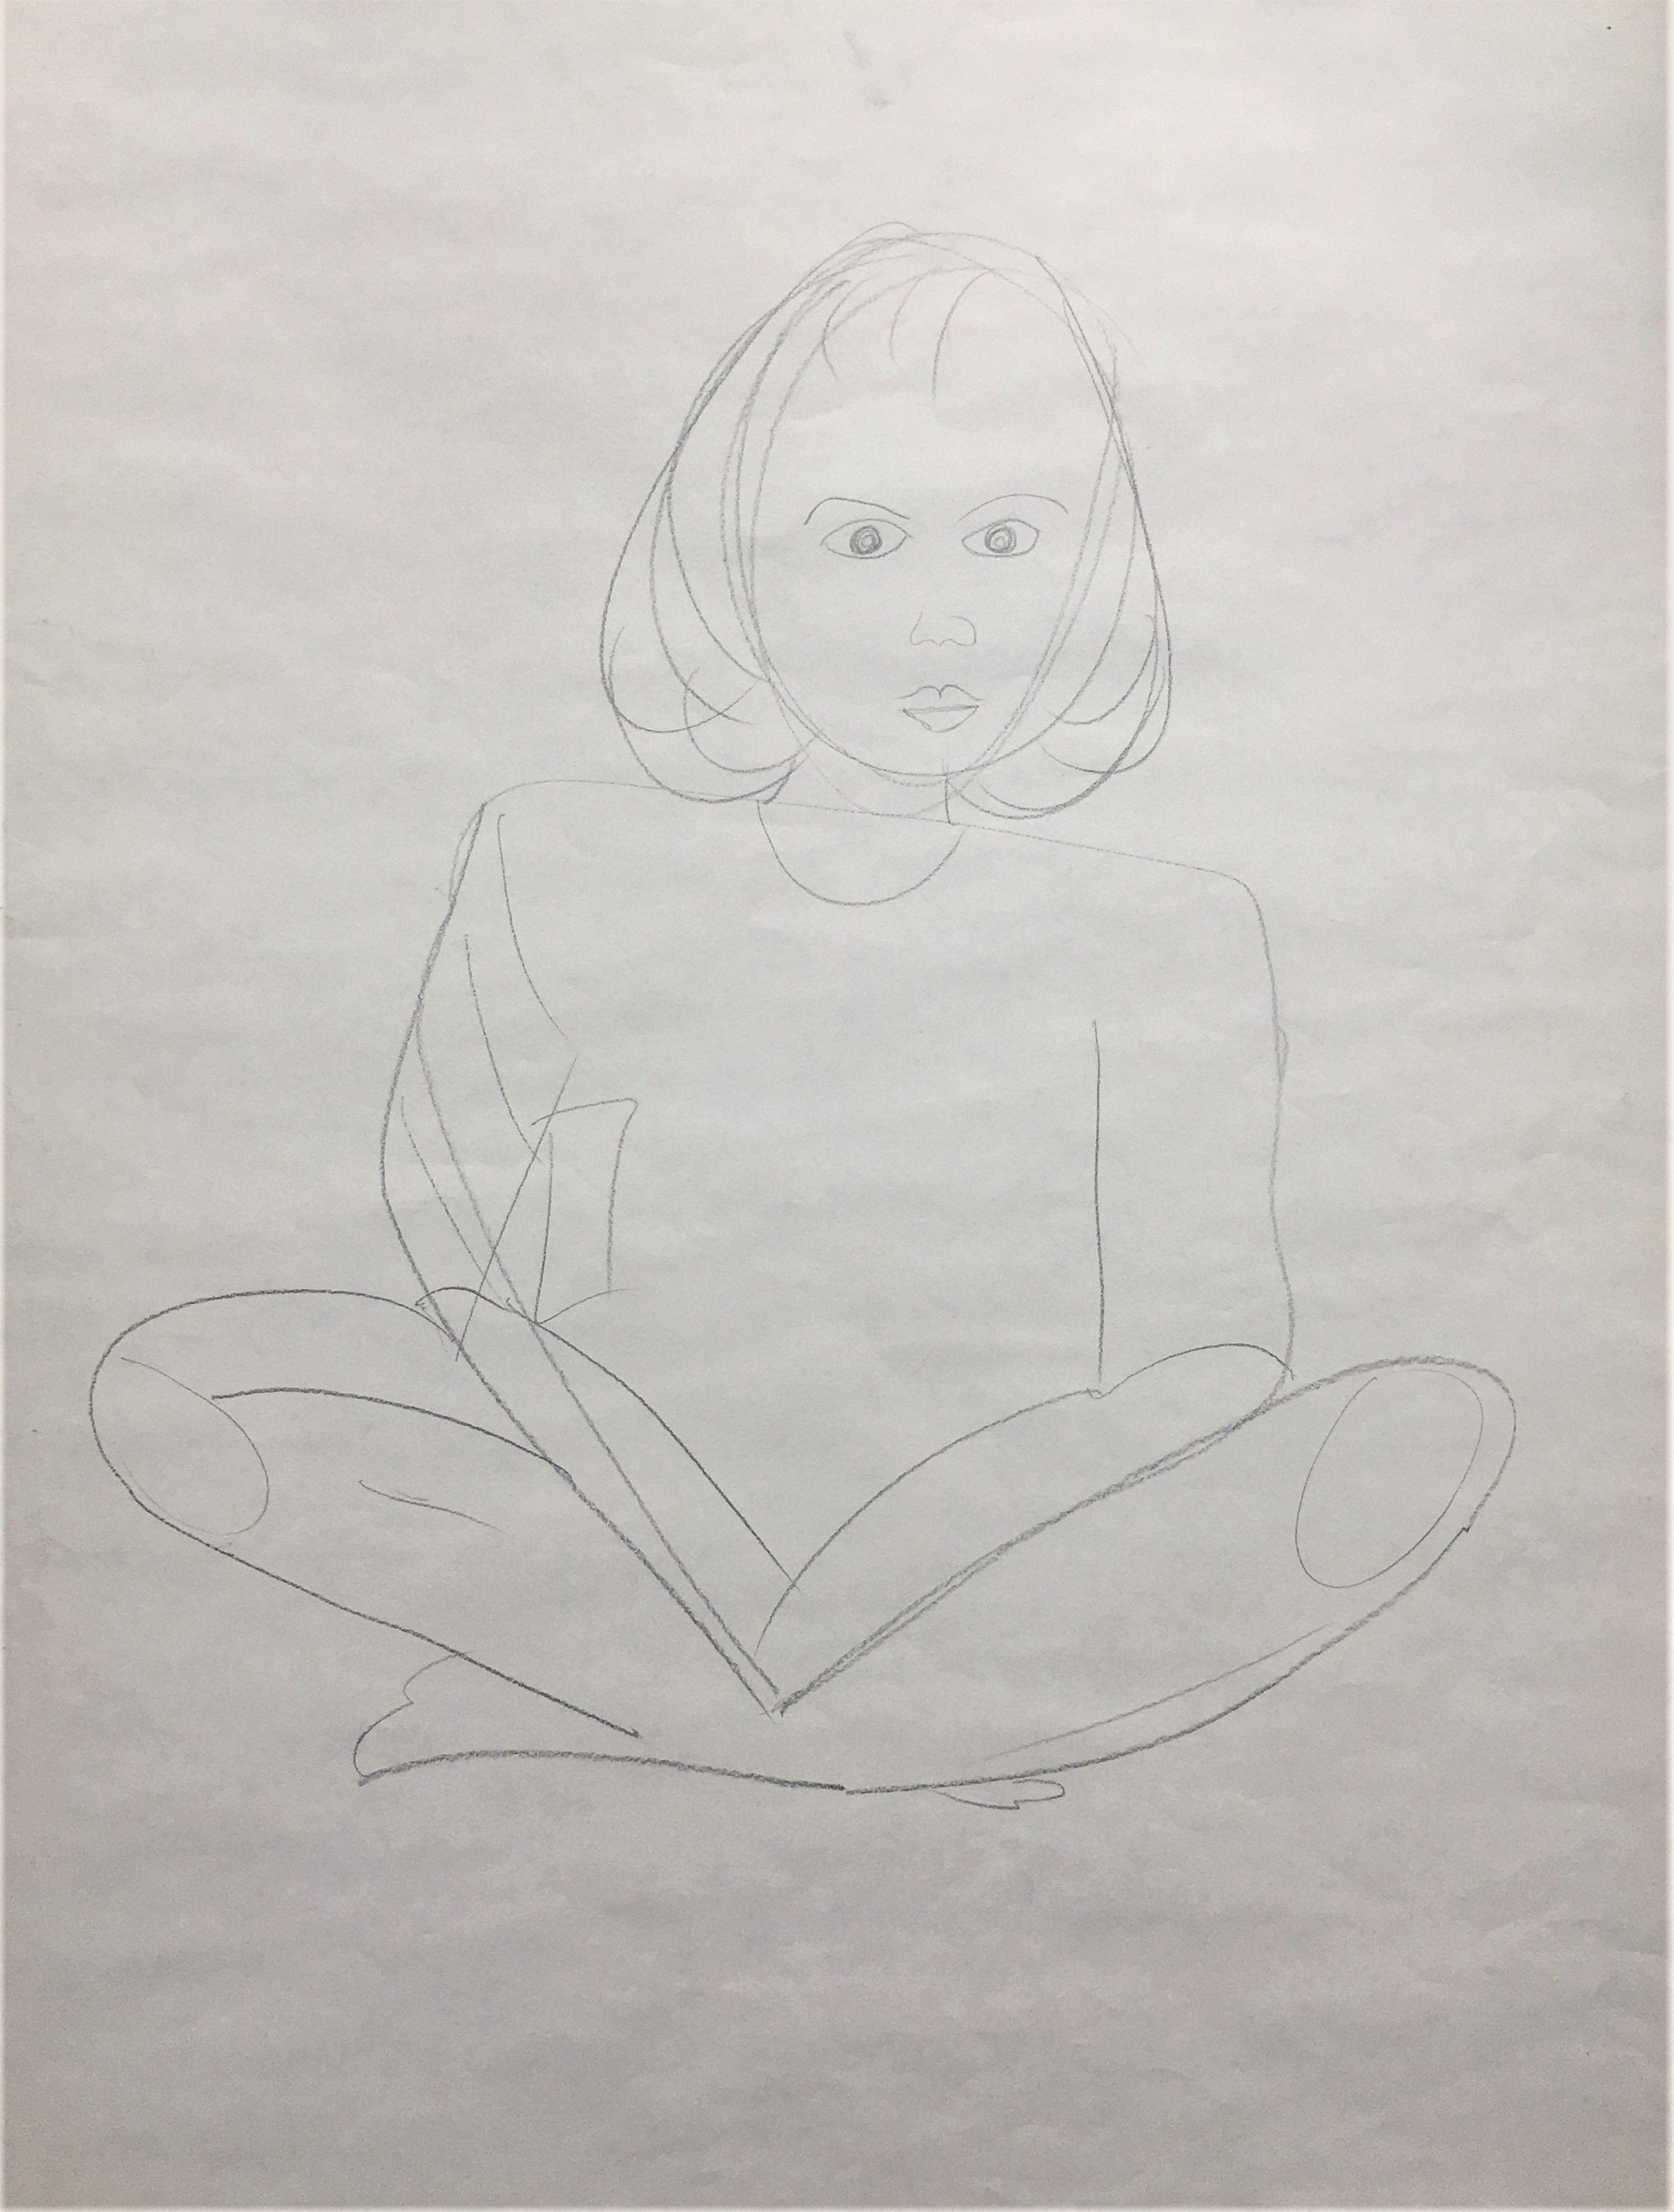 Self-Portrait Line Gesture, 1992
Pencil on Paper
18"W x 24"H, Walli White, artist